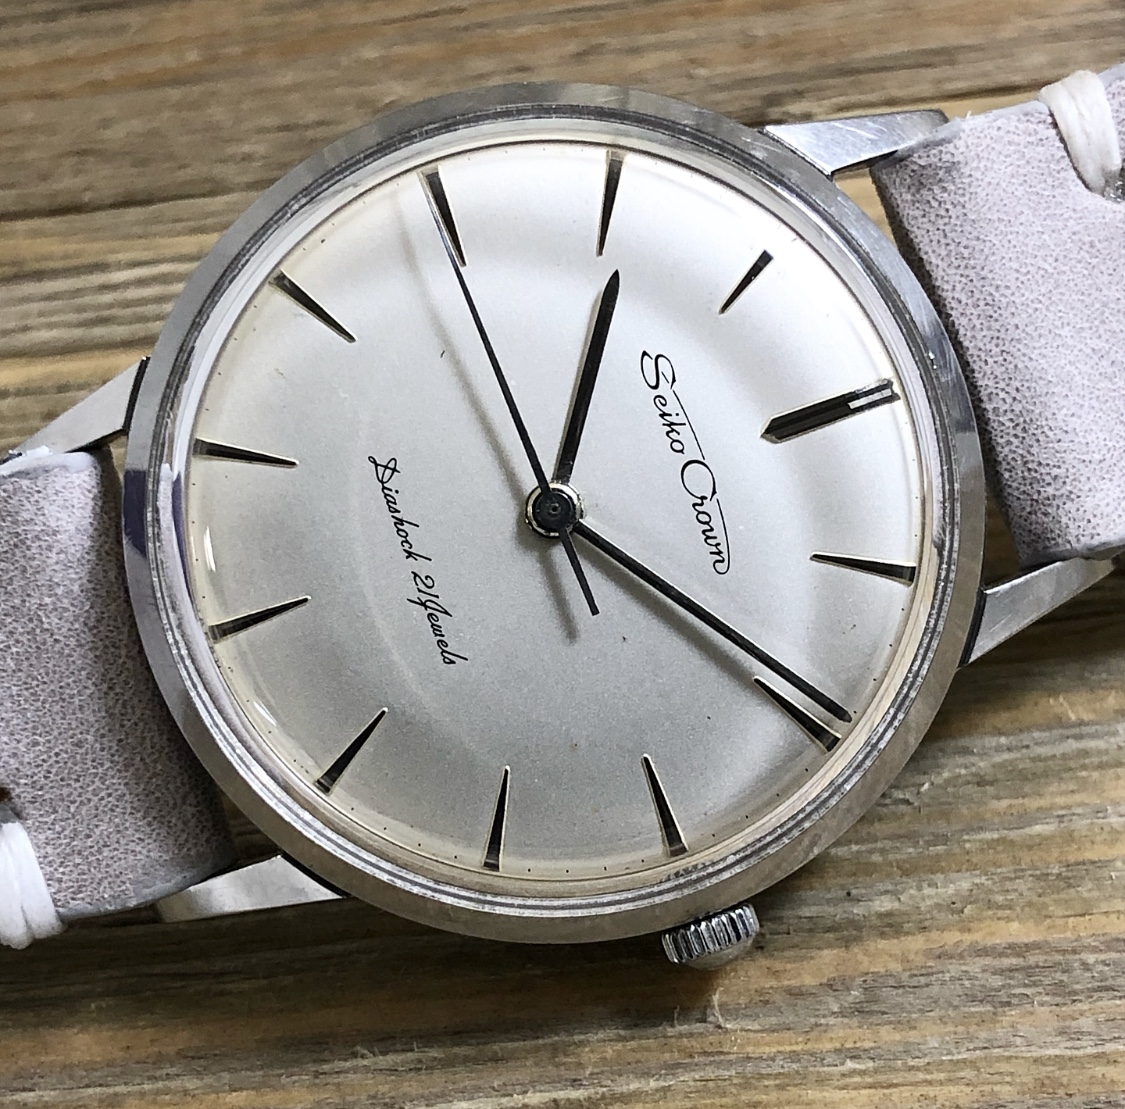 【hiroshi様 専用】【OH済】1961 Seiko Crown 15002 腕時計(アナログ) 時計 メンズ 値打ち